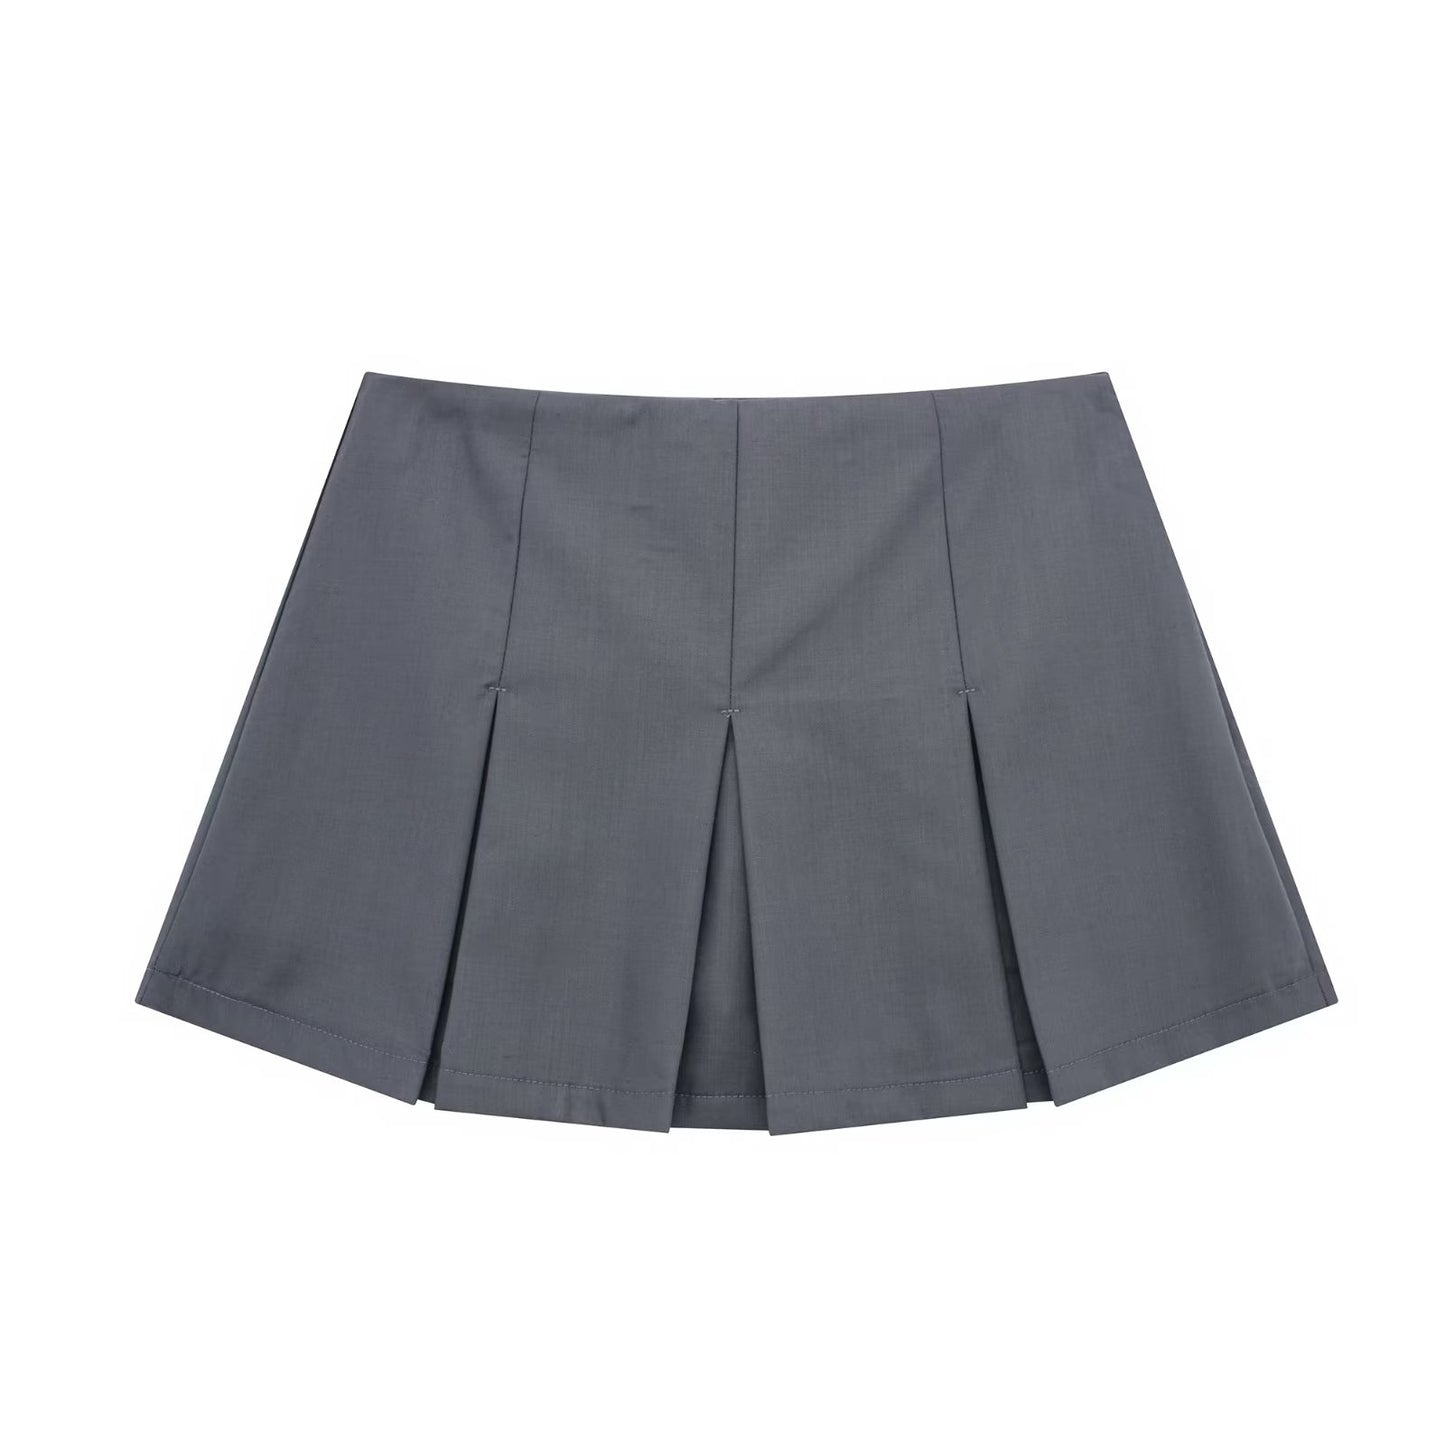 ZEVITY Women High Waist Wide Pleats Design Slim Shorts Skirts Female Side Zipper Culottes Hot Shorts Chic Pantalone Cortos P2576